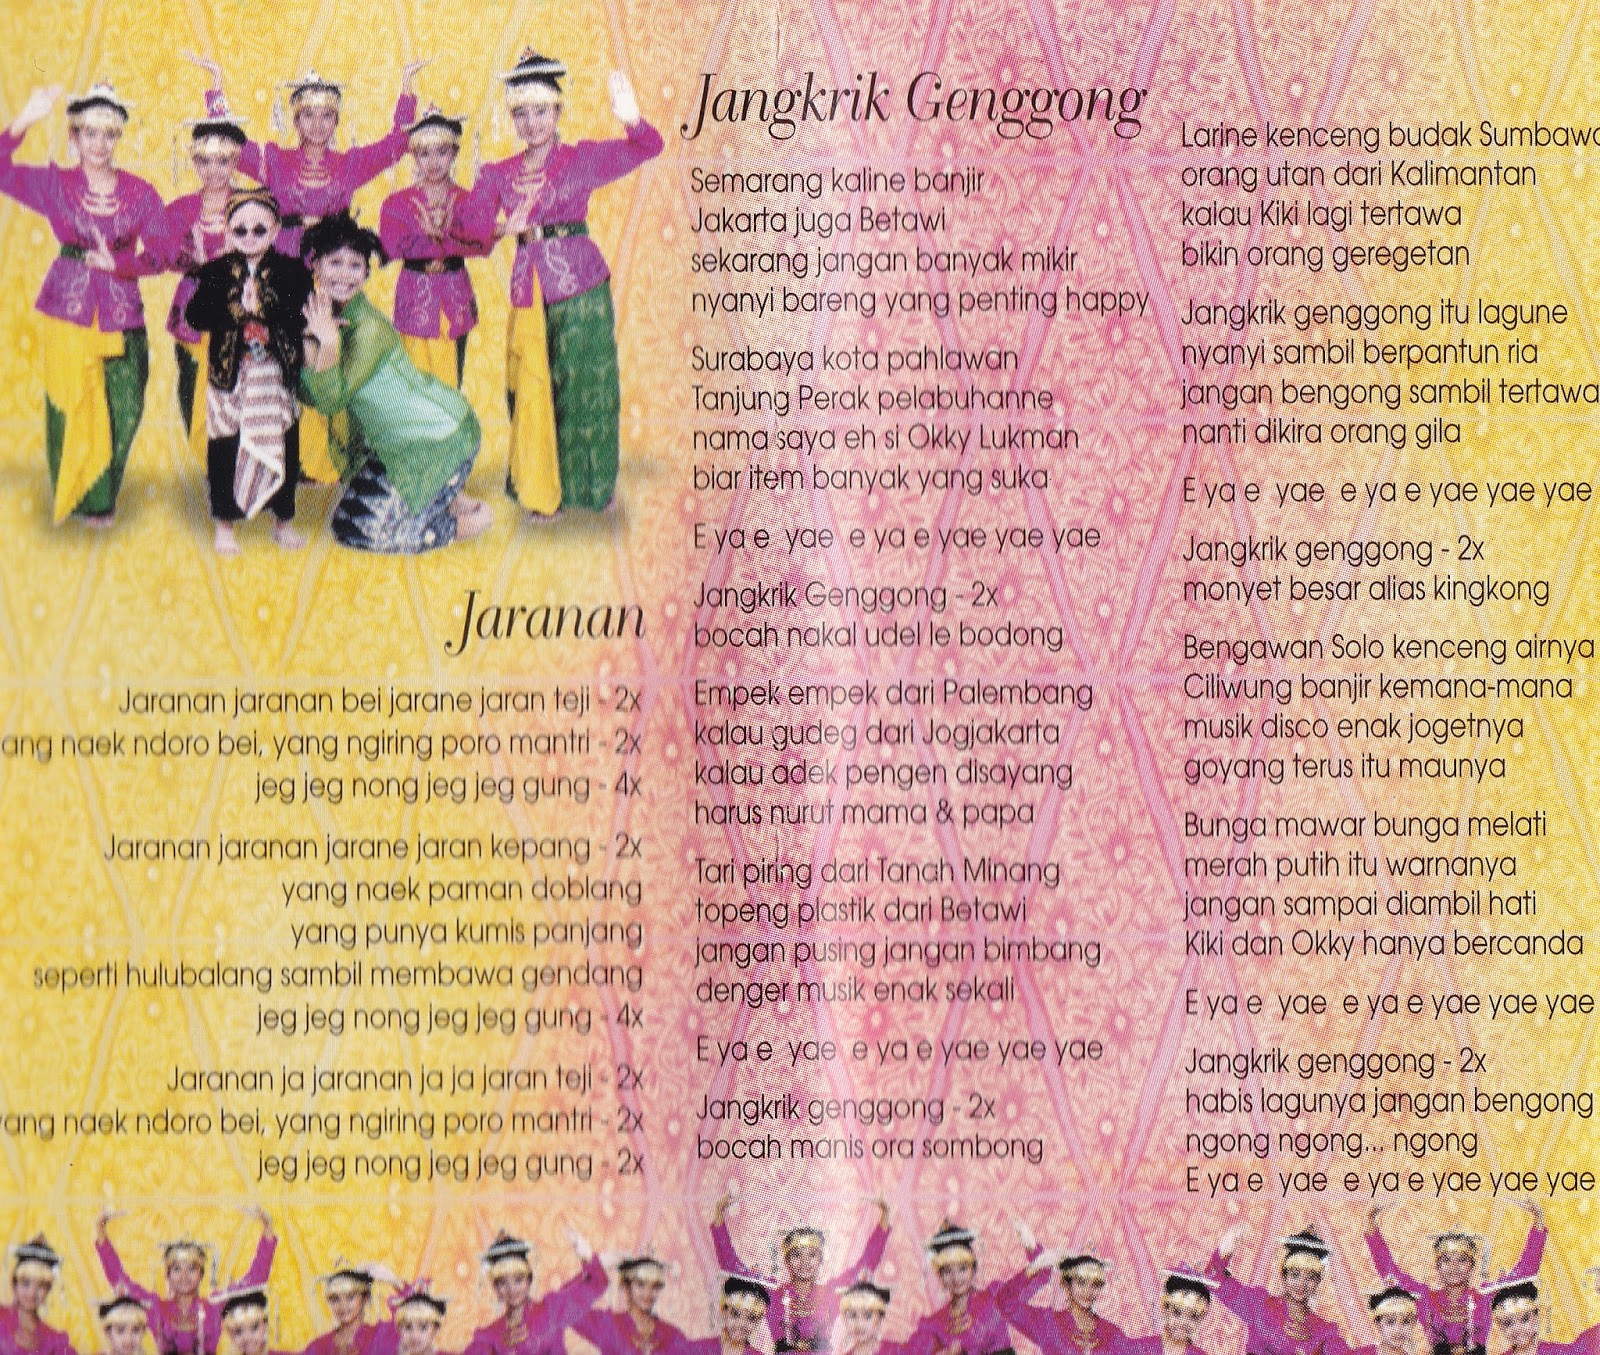 Aneka budaya daerah Indonesia diangkat dalam persembahan lagu Yuk kita simak sampul kaset album Jaranan